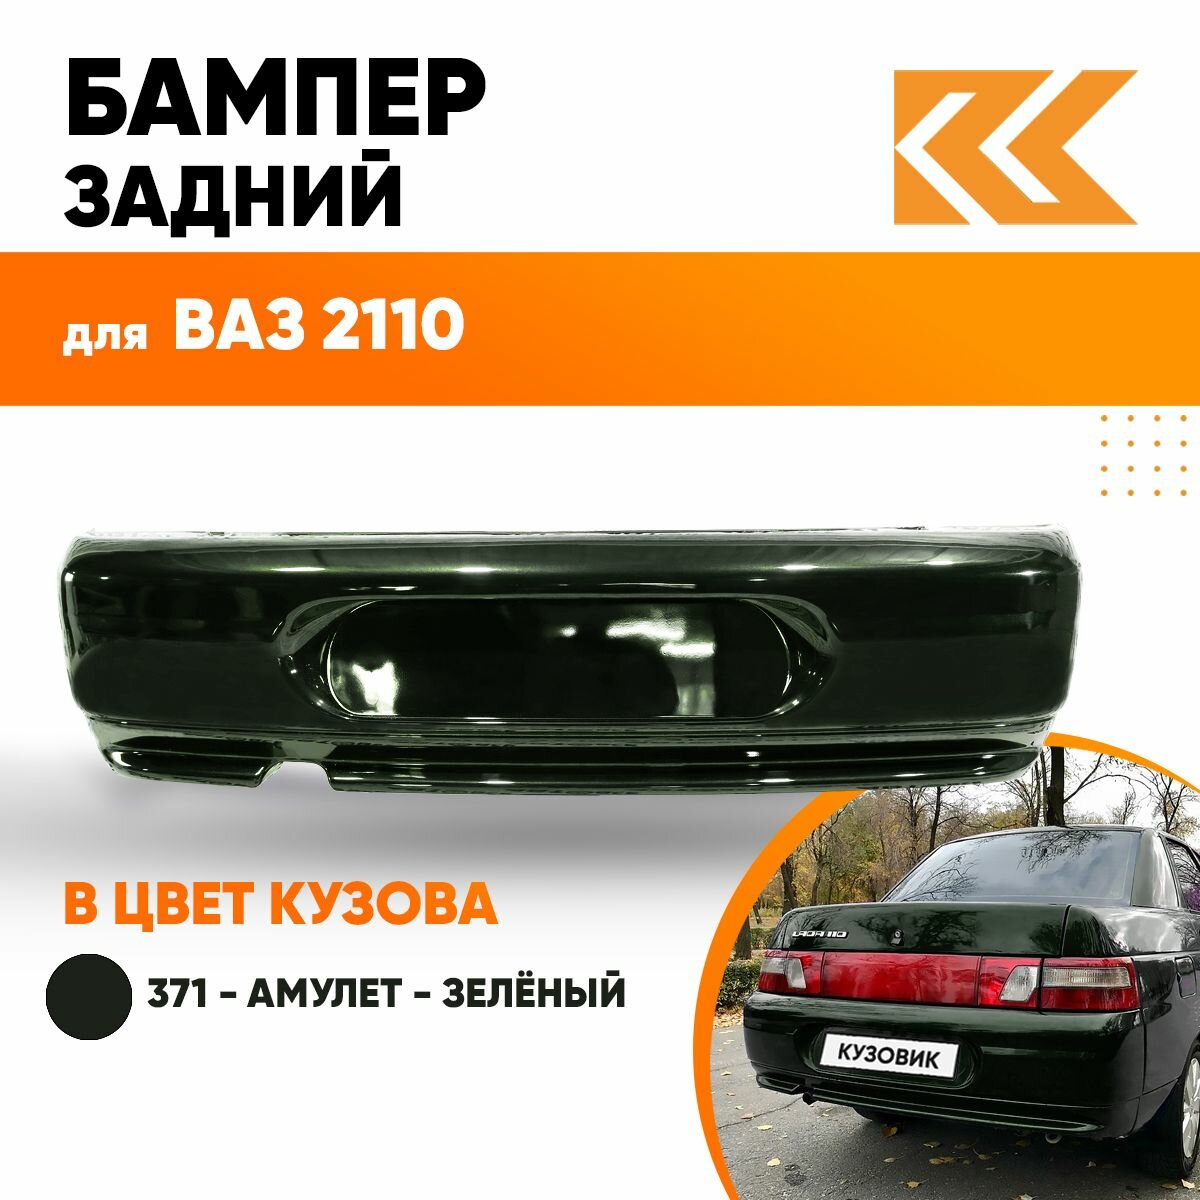 Бампер задний в цвет кузова ВАЗ 2110 371 - Амулет - Зеленый